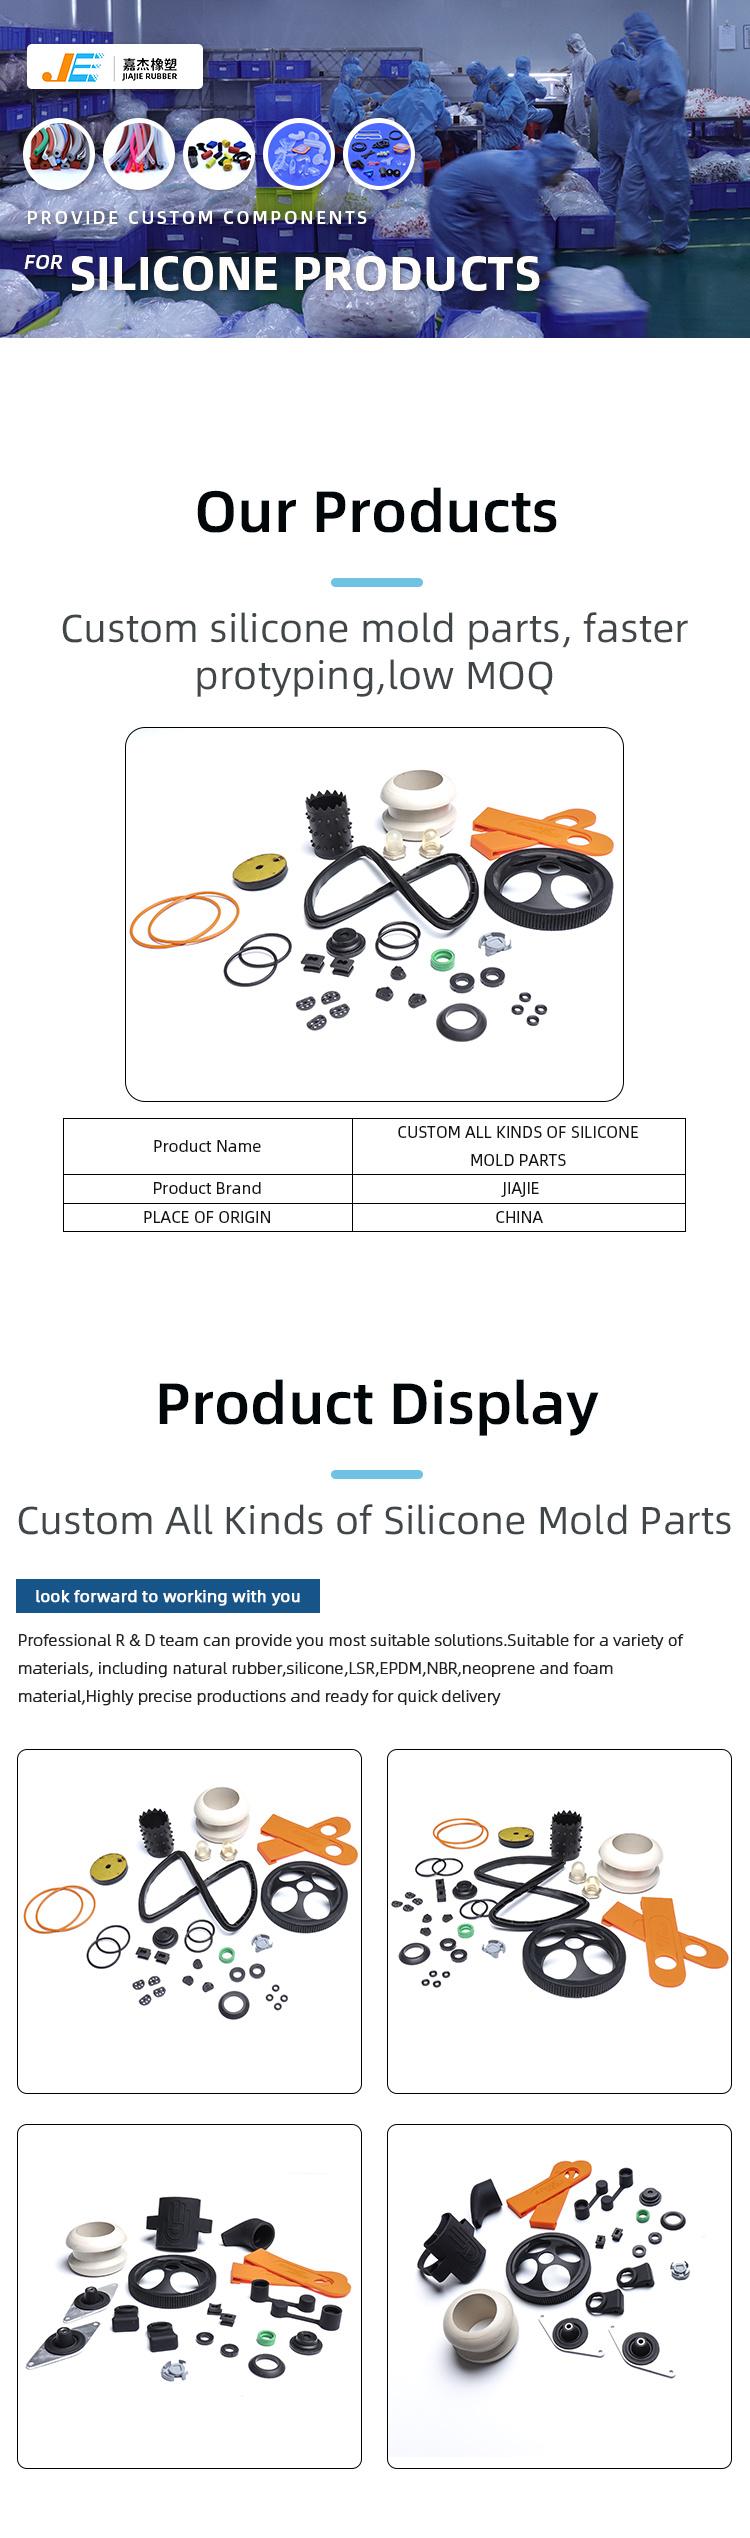 Custom Silicone & Rubber Molding Parts